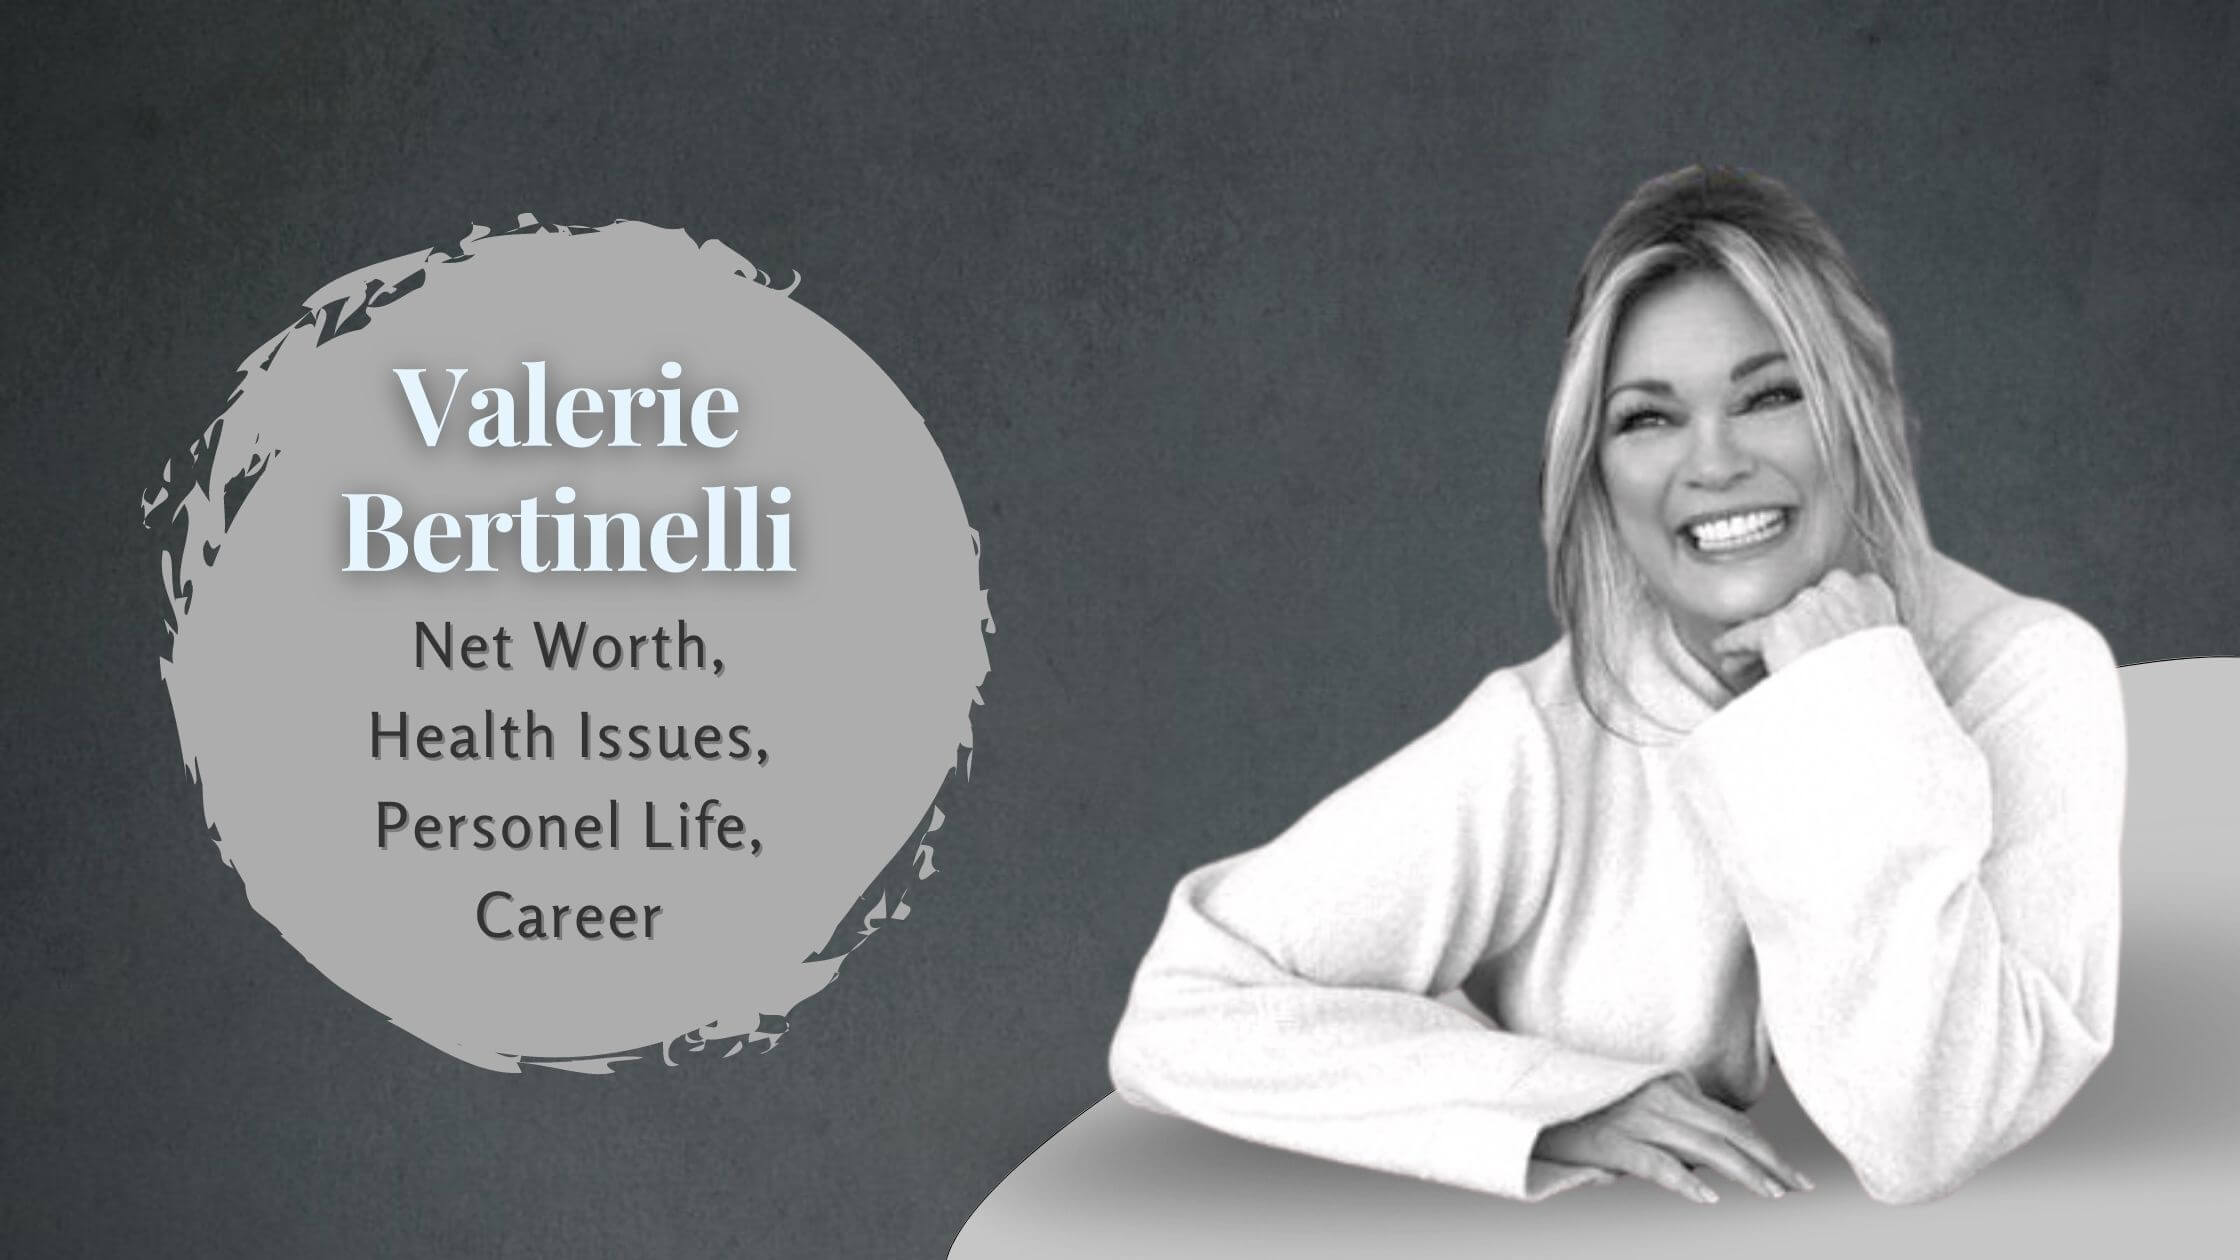 Valerie Bertinelli Net Worth, Health Issues, Personel Life, Career